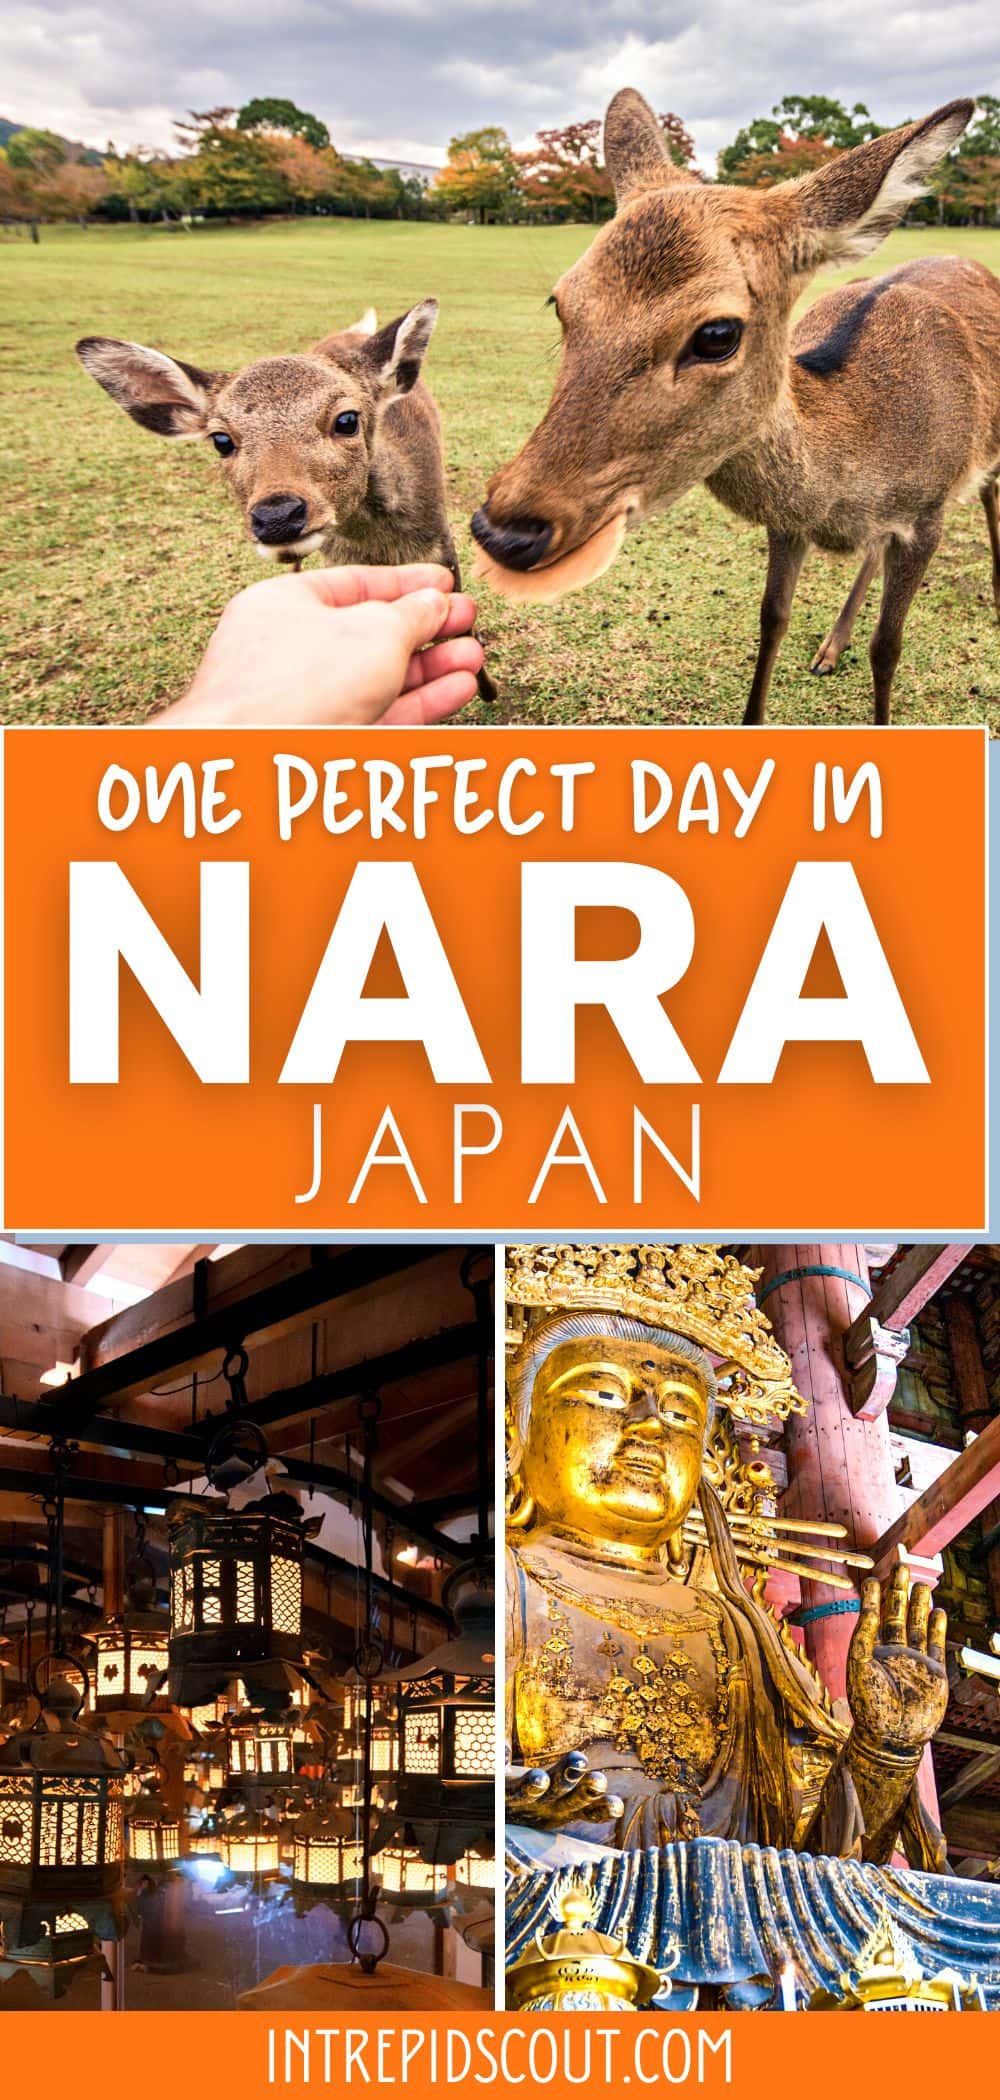 One Day in Nara